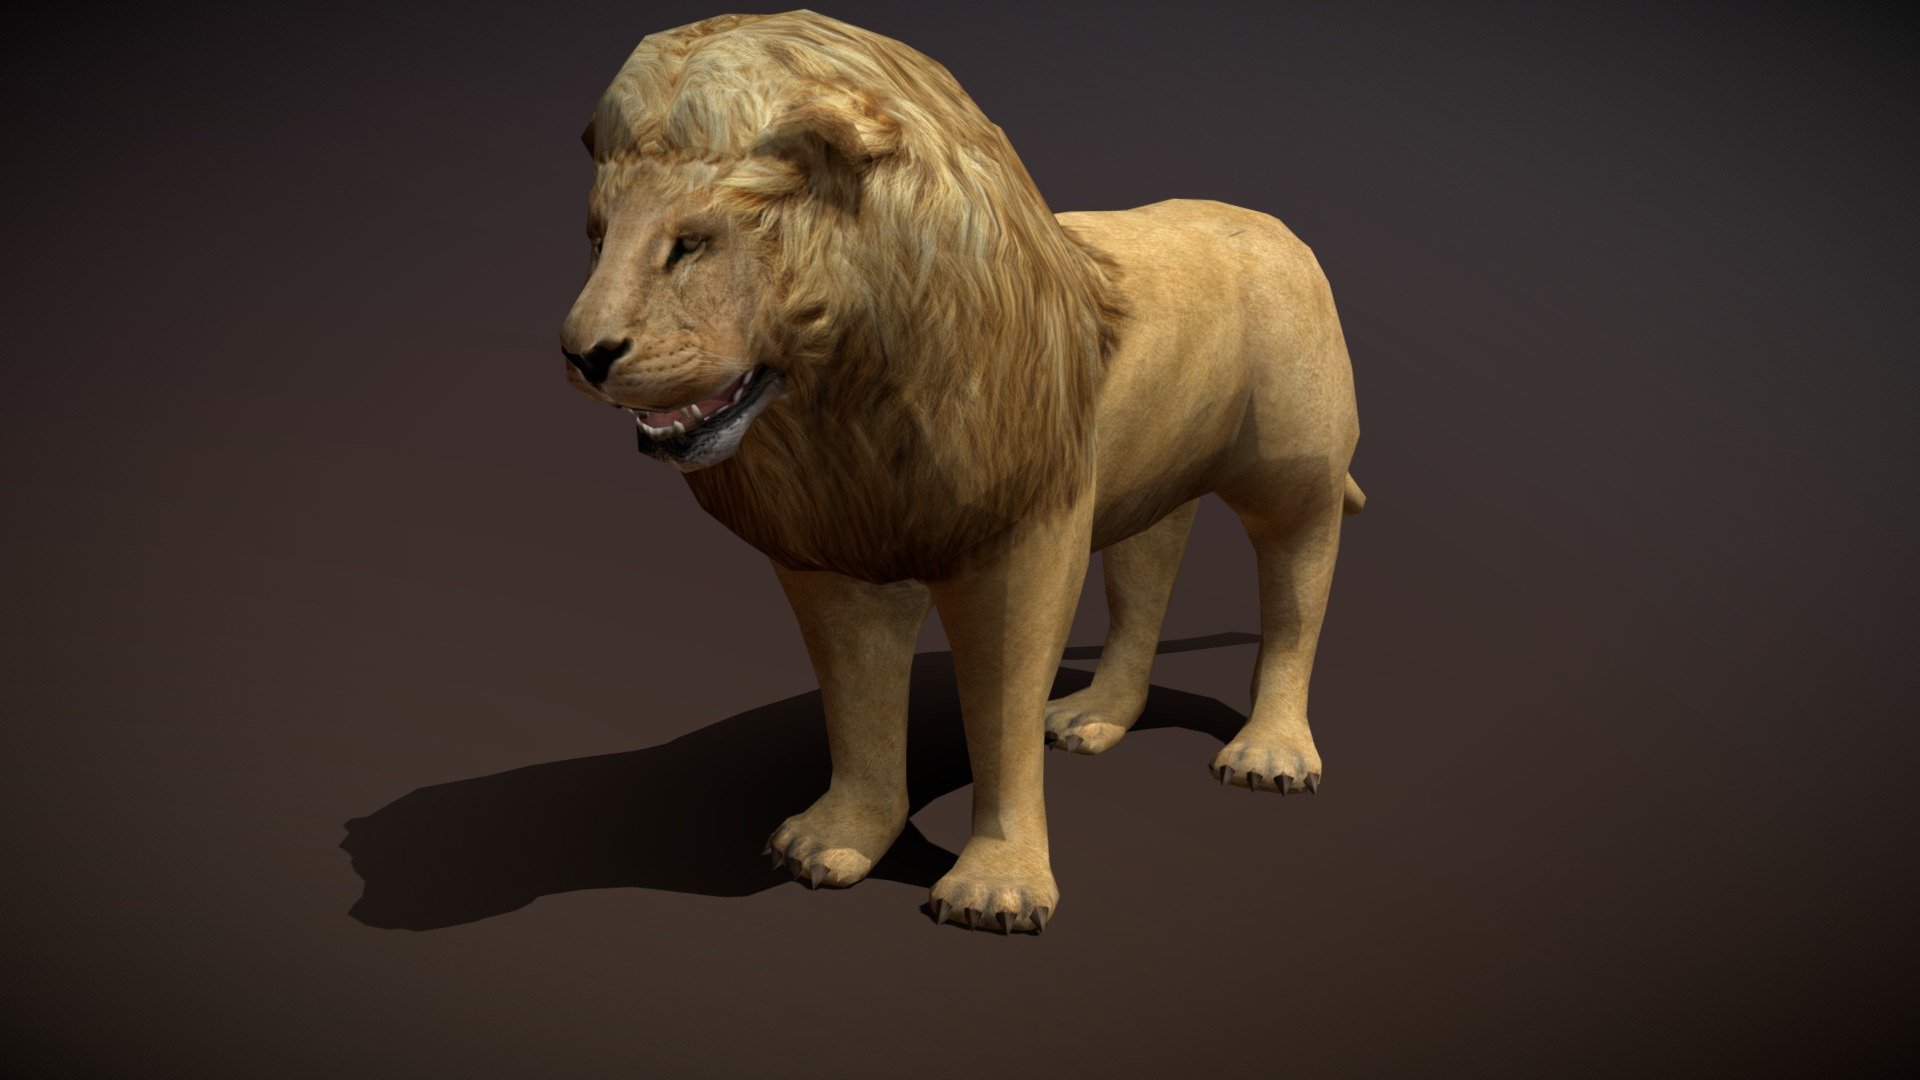 Safari Animals Lion Buy Royalty Free 3d Model By 3drt Com 3drt Com 3b8cfed